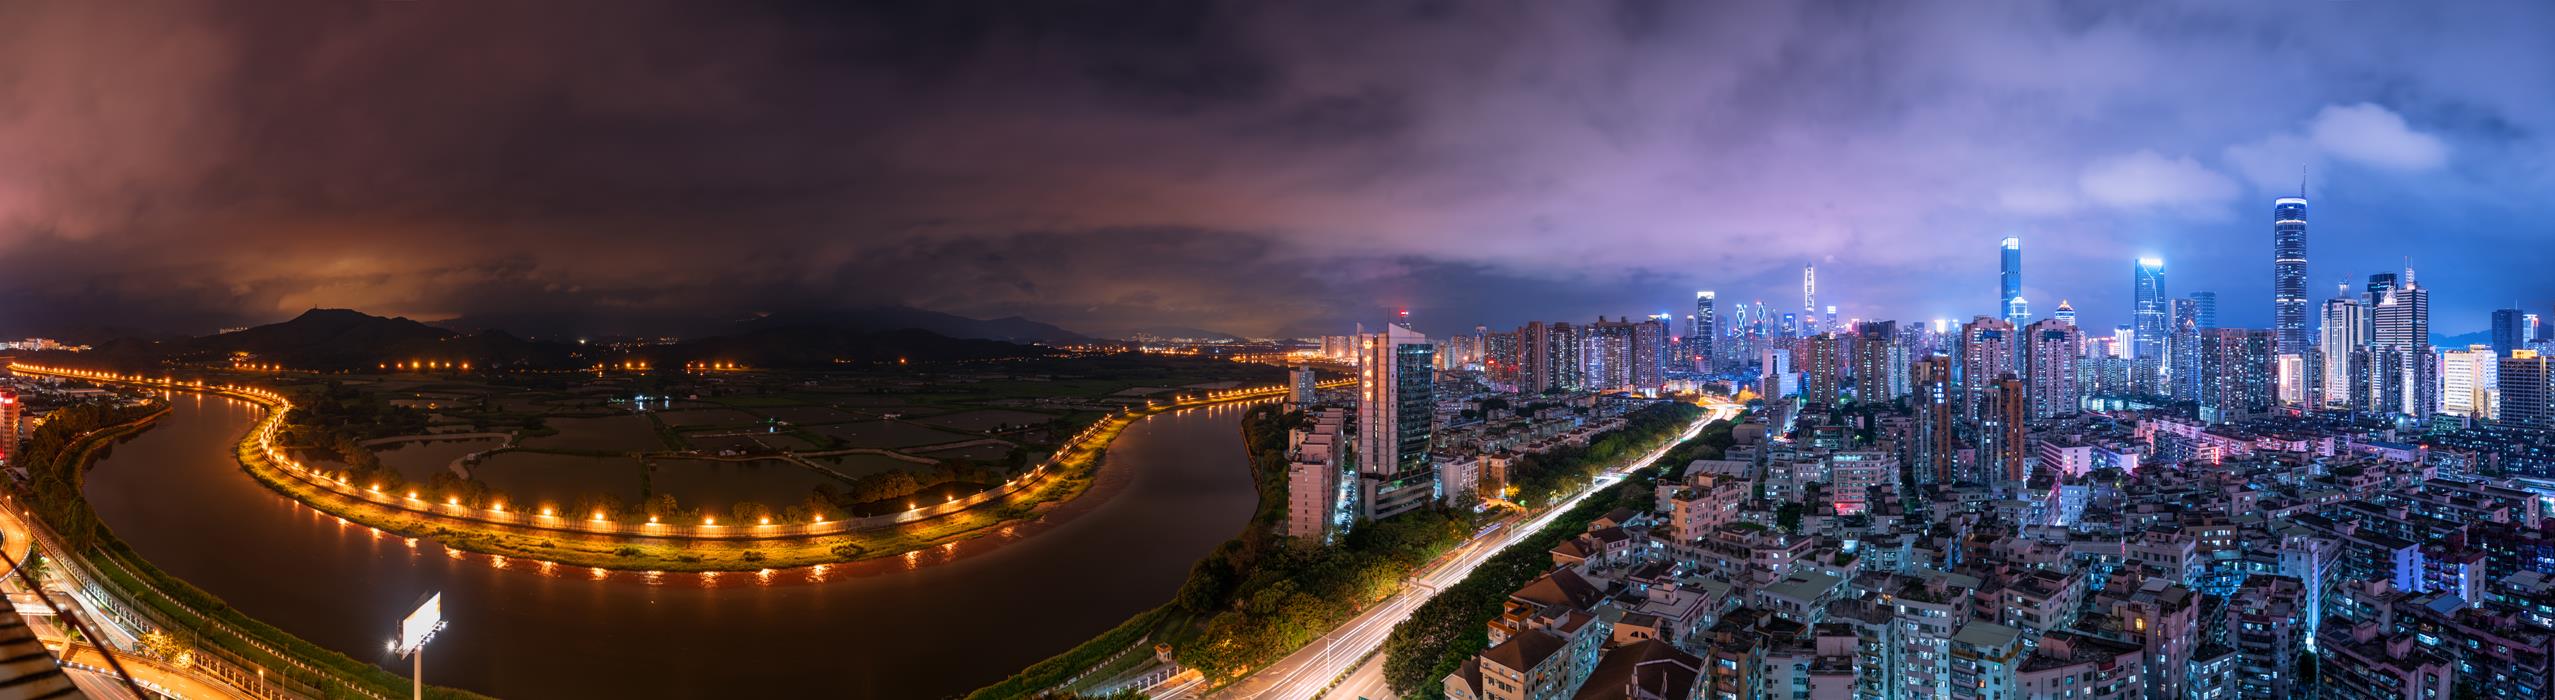 Гонконг- Шеньчжень - интерьерная фотокартина